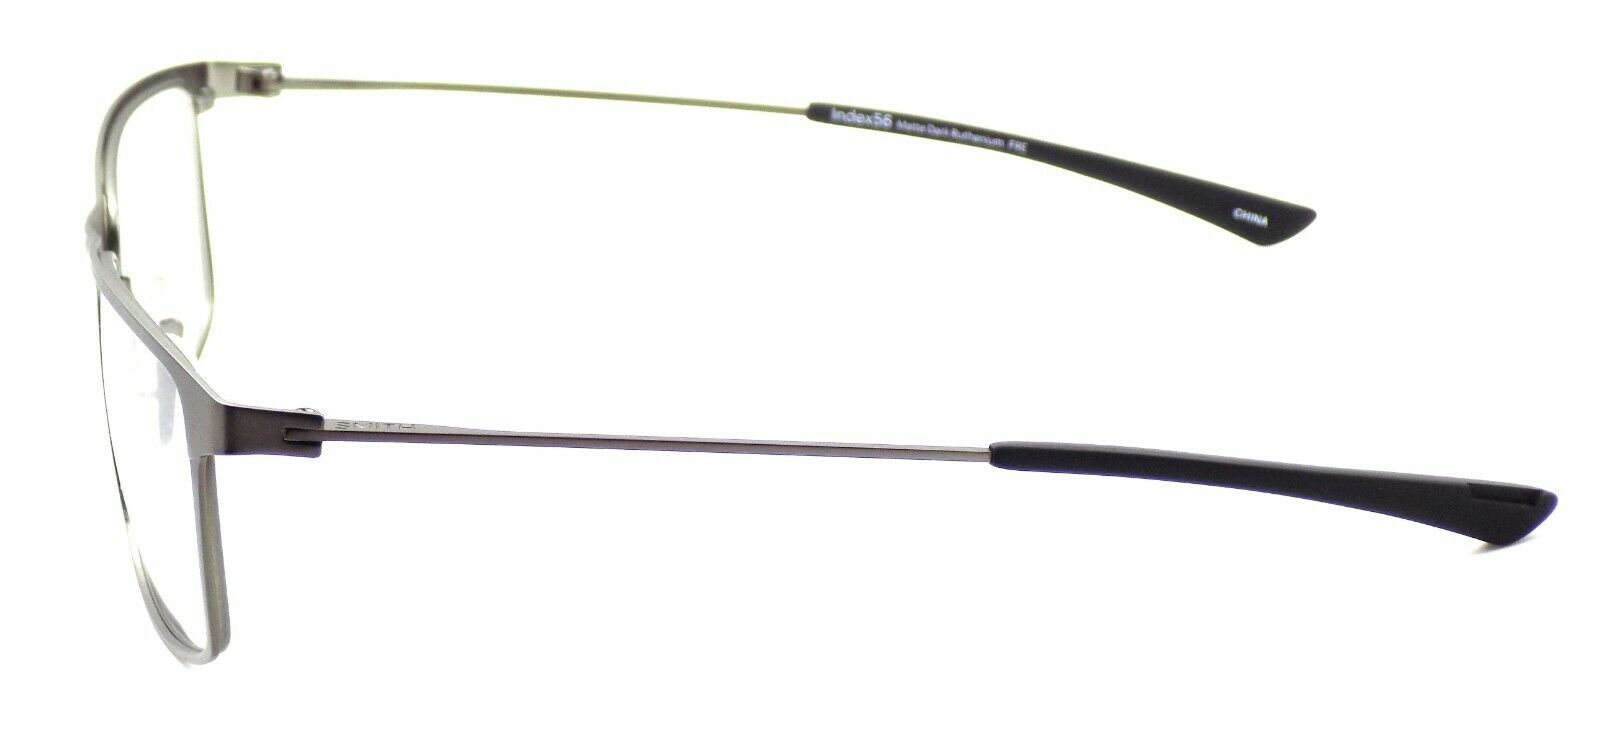 3-SMITH Optics Index56 FRE Men's Eyeglasses Frames 56-15-140 Matte Dark Ruthenium-762753296283-IKSpecs